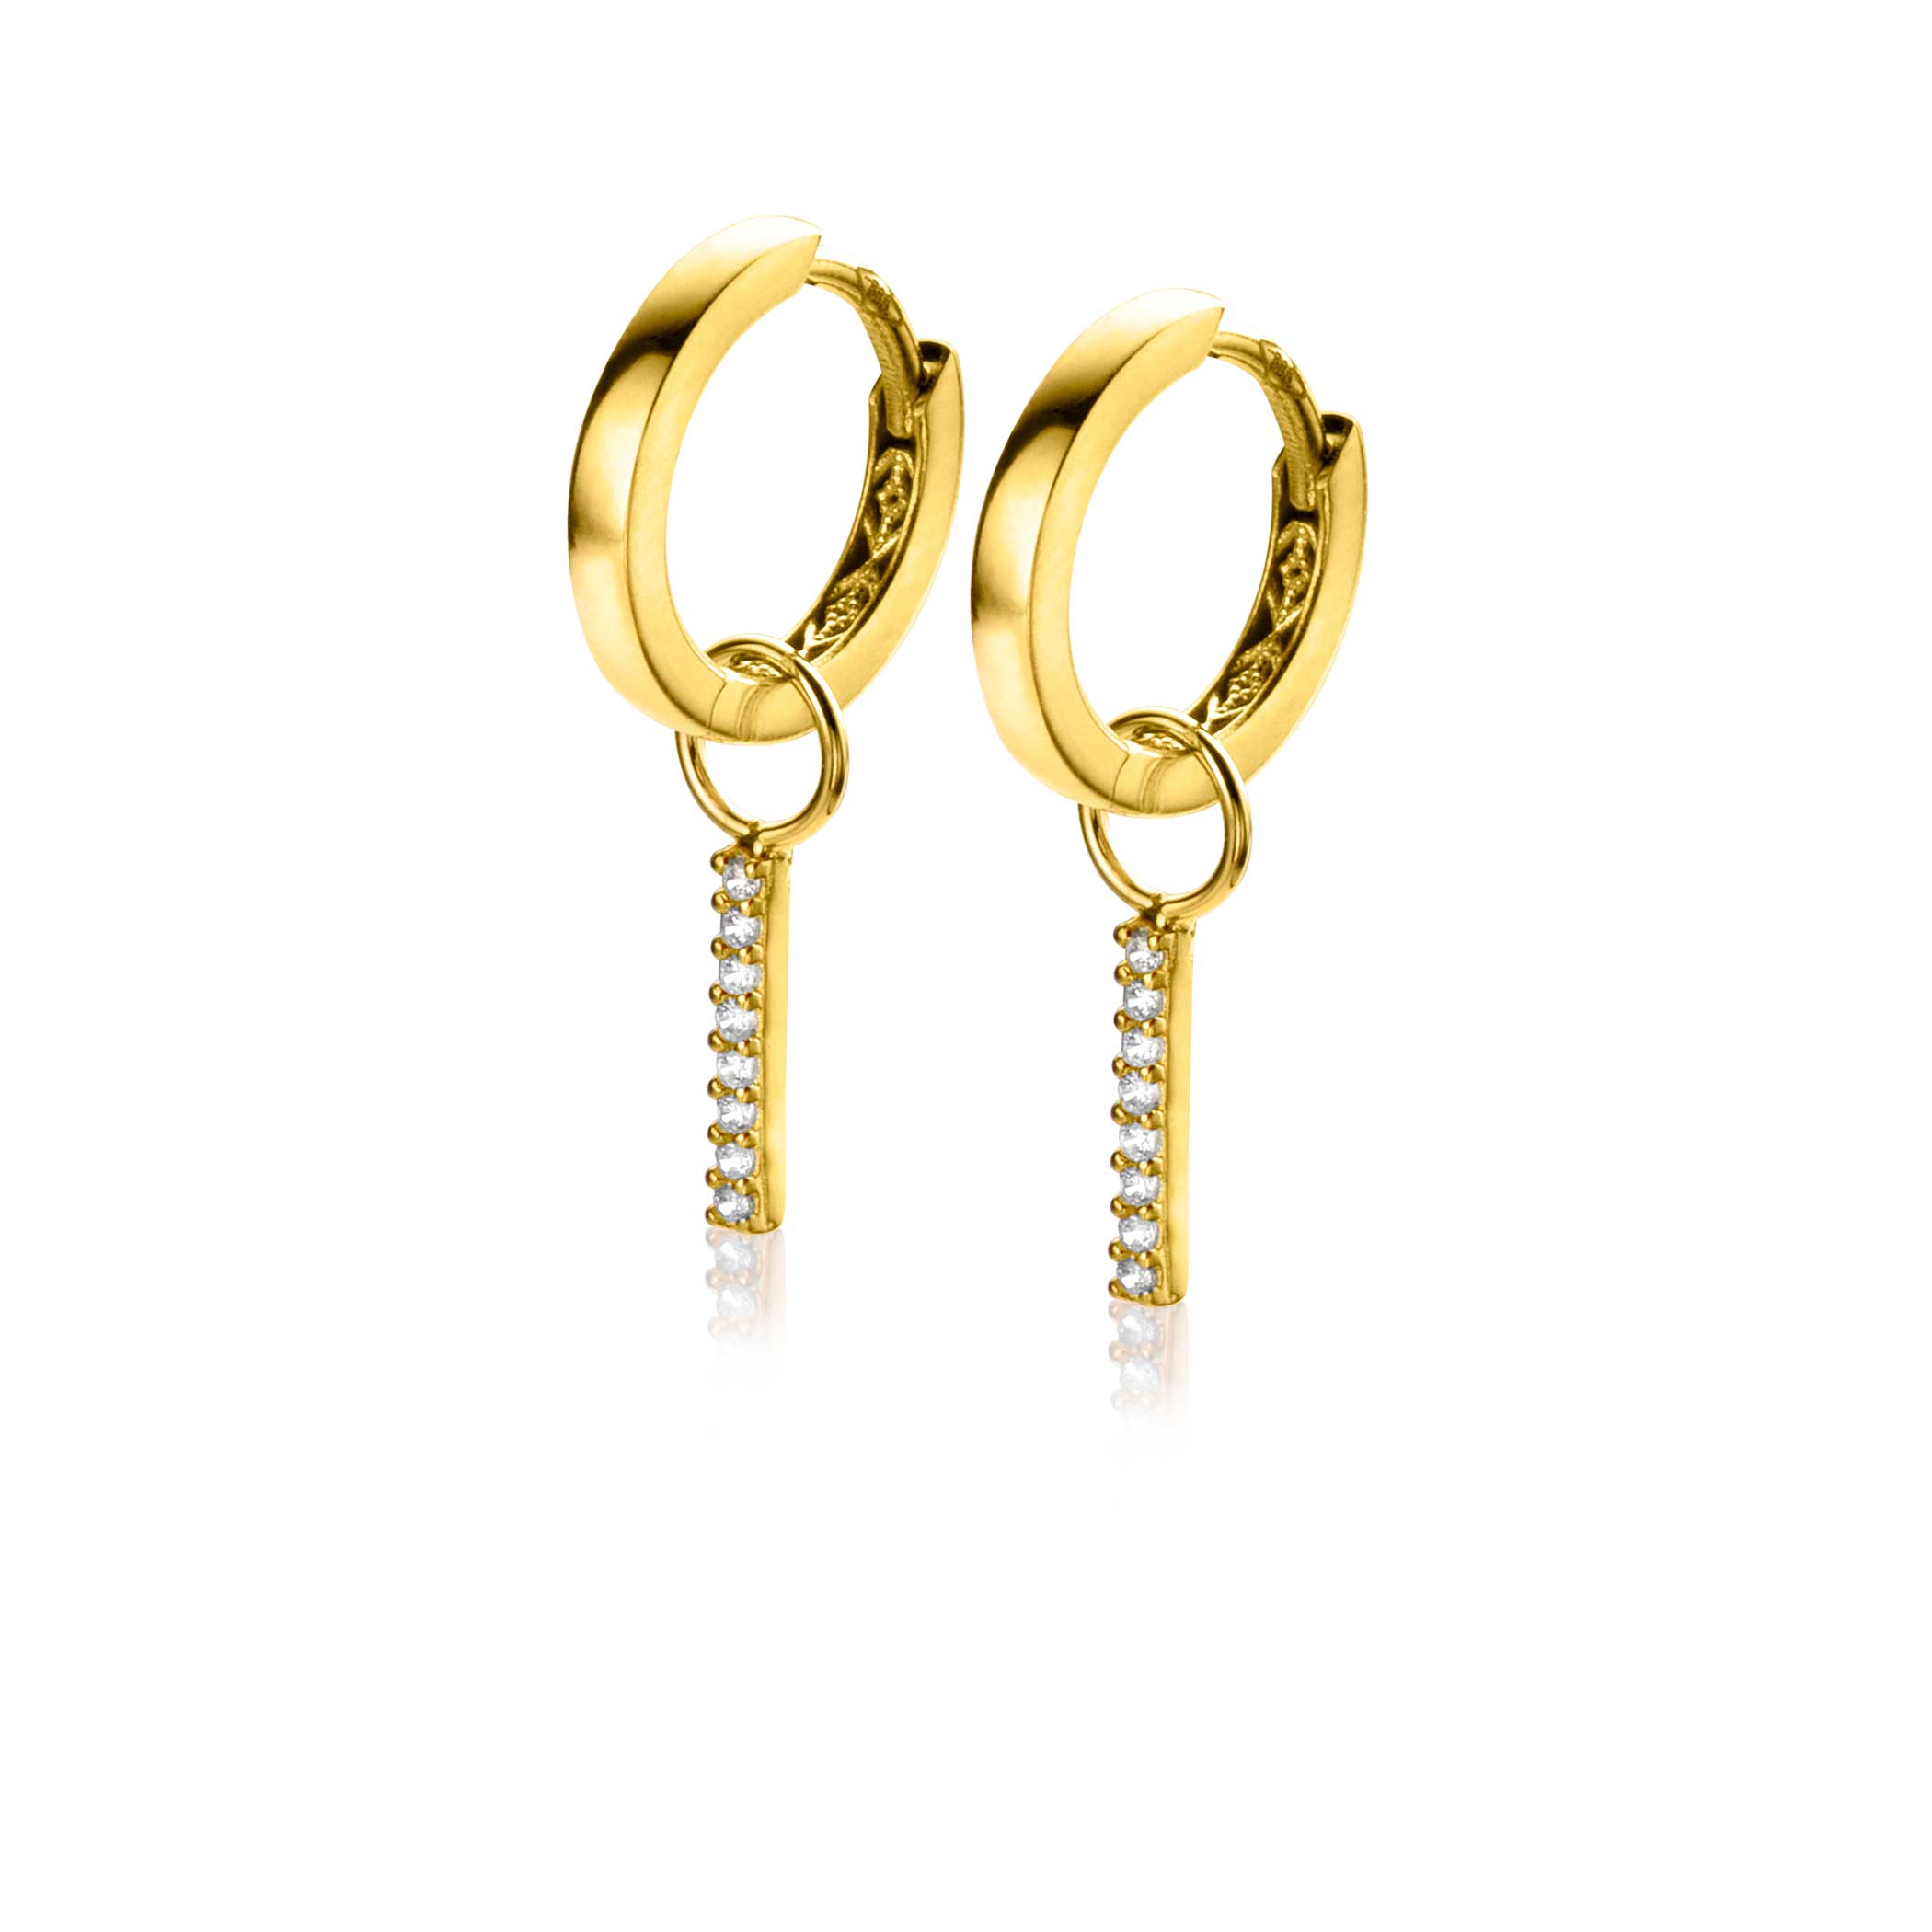 ZINZI 14K Gold Earrings Pendants Bar White Zirconias 10mm ZGCH387 (excl. hoop earrings)